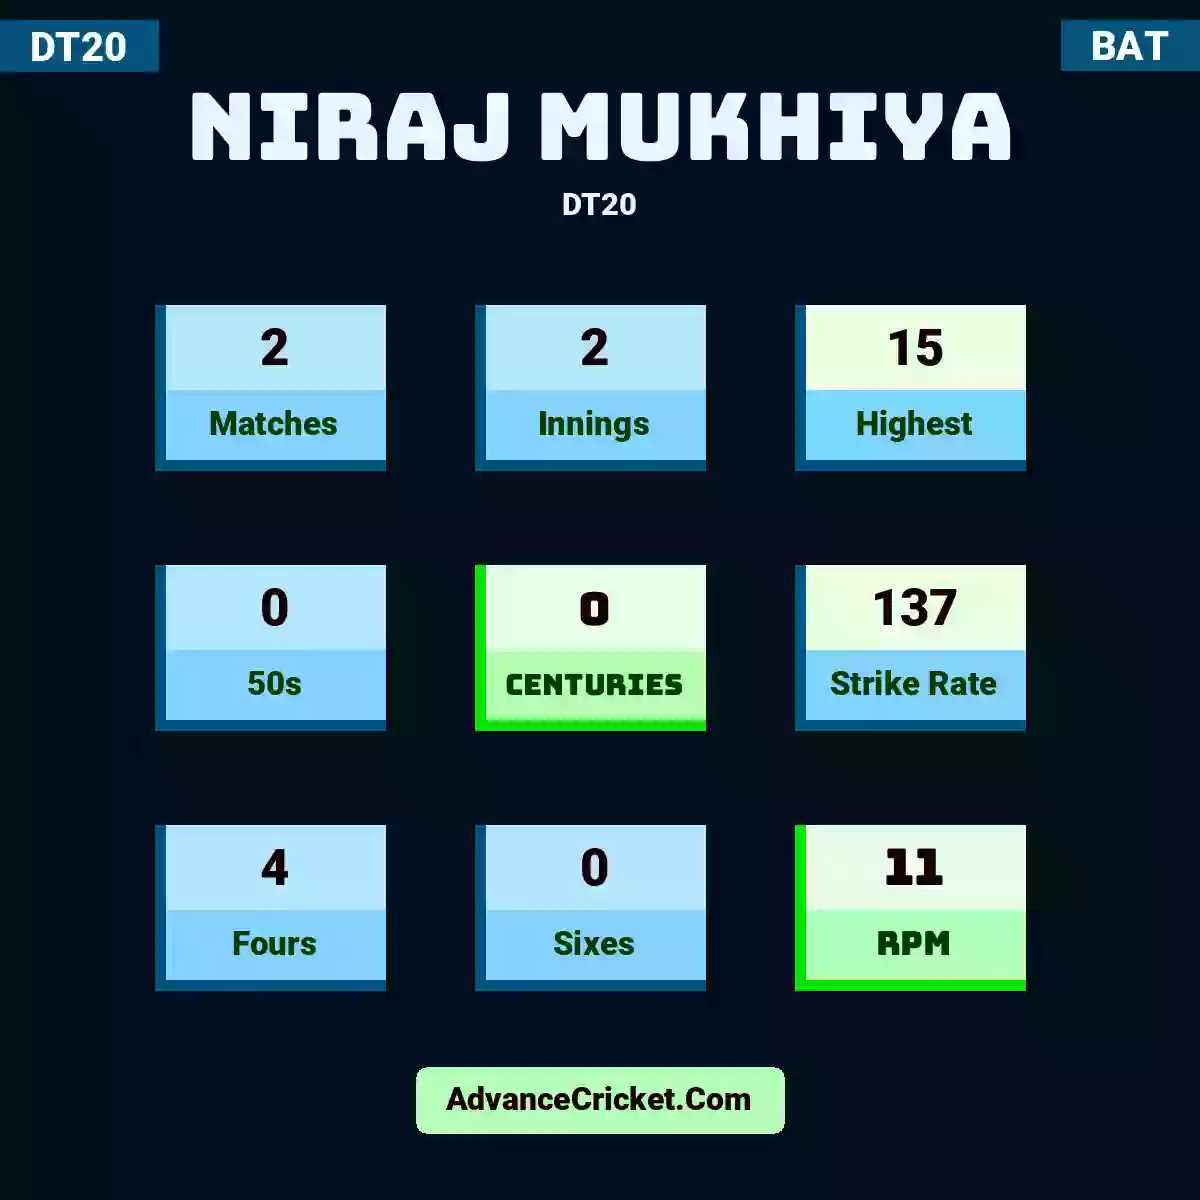 Niraj Mukhiya DT20 , Niraj Mukhiya played 2 matches, scored 15 runs as highest, 0 half-centuries, and 0 centuries, with a strike rate of 137. N.Mukhiya hit 4 fours and 0 sixes, with an RPM of 11.